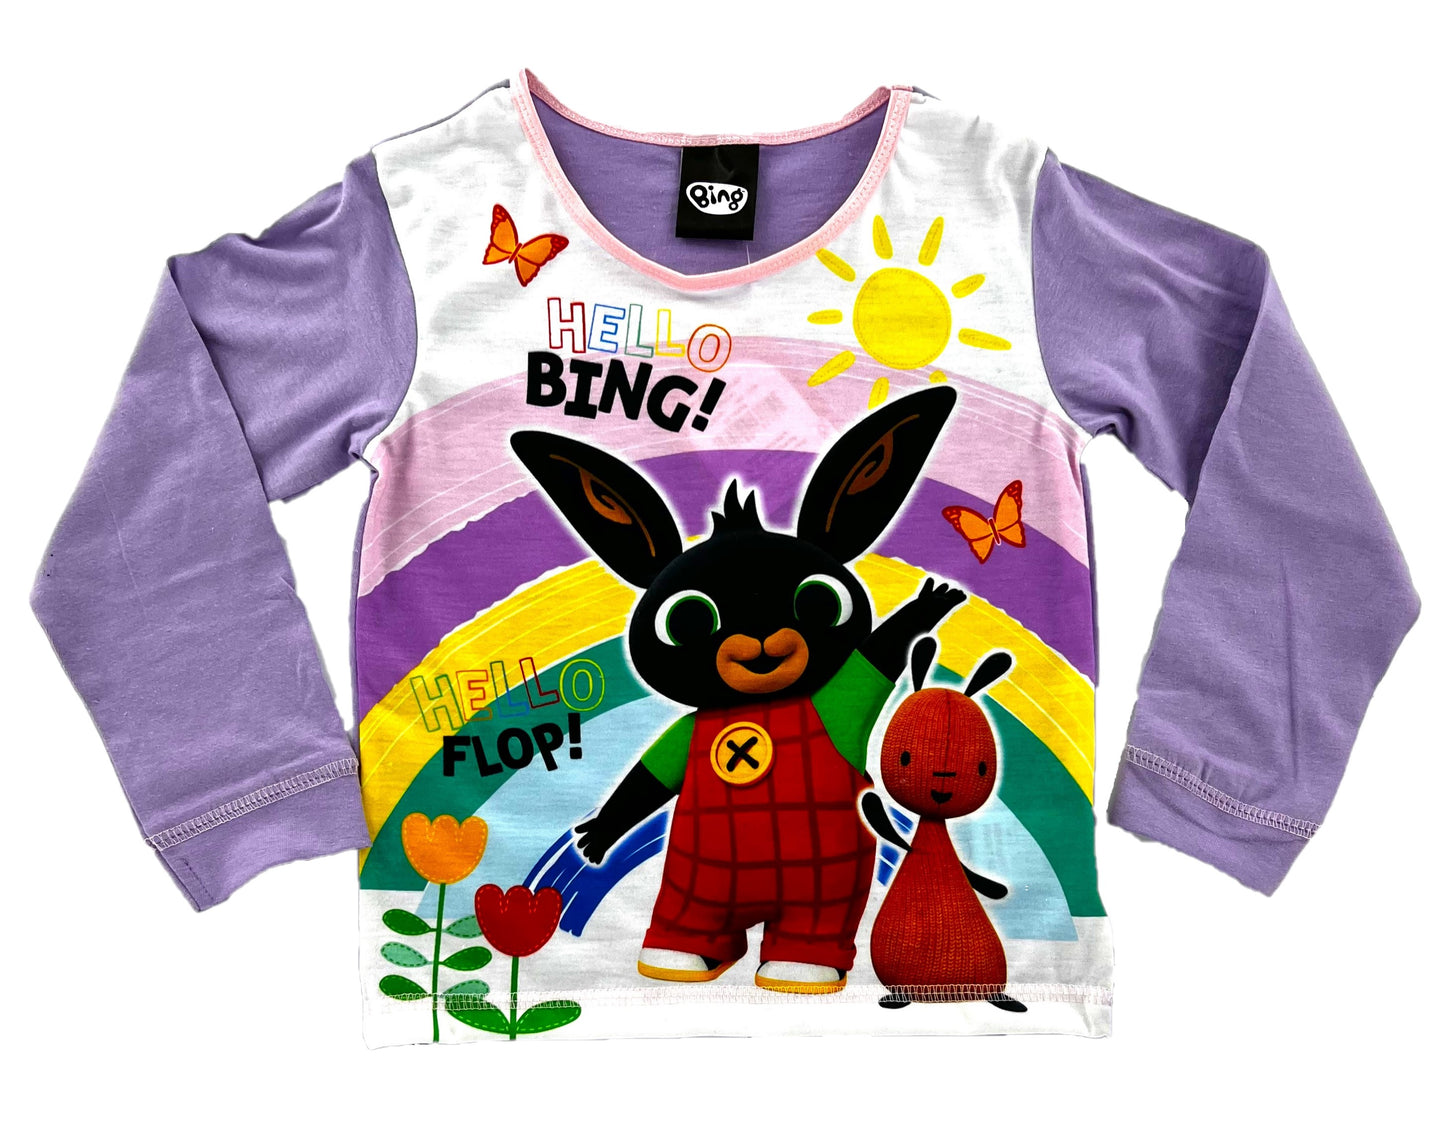 Bing "Hello" Girl's 2 Piece Pyjamas Nightwear Set 1-5 Years